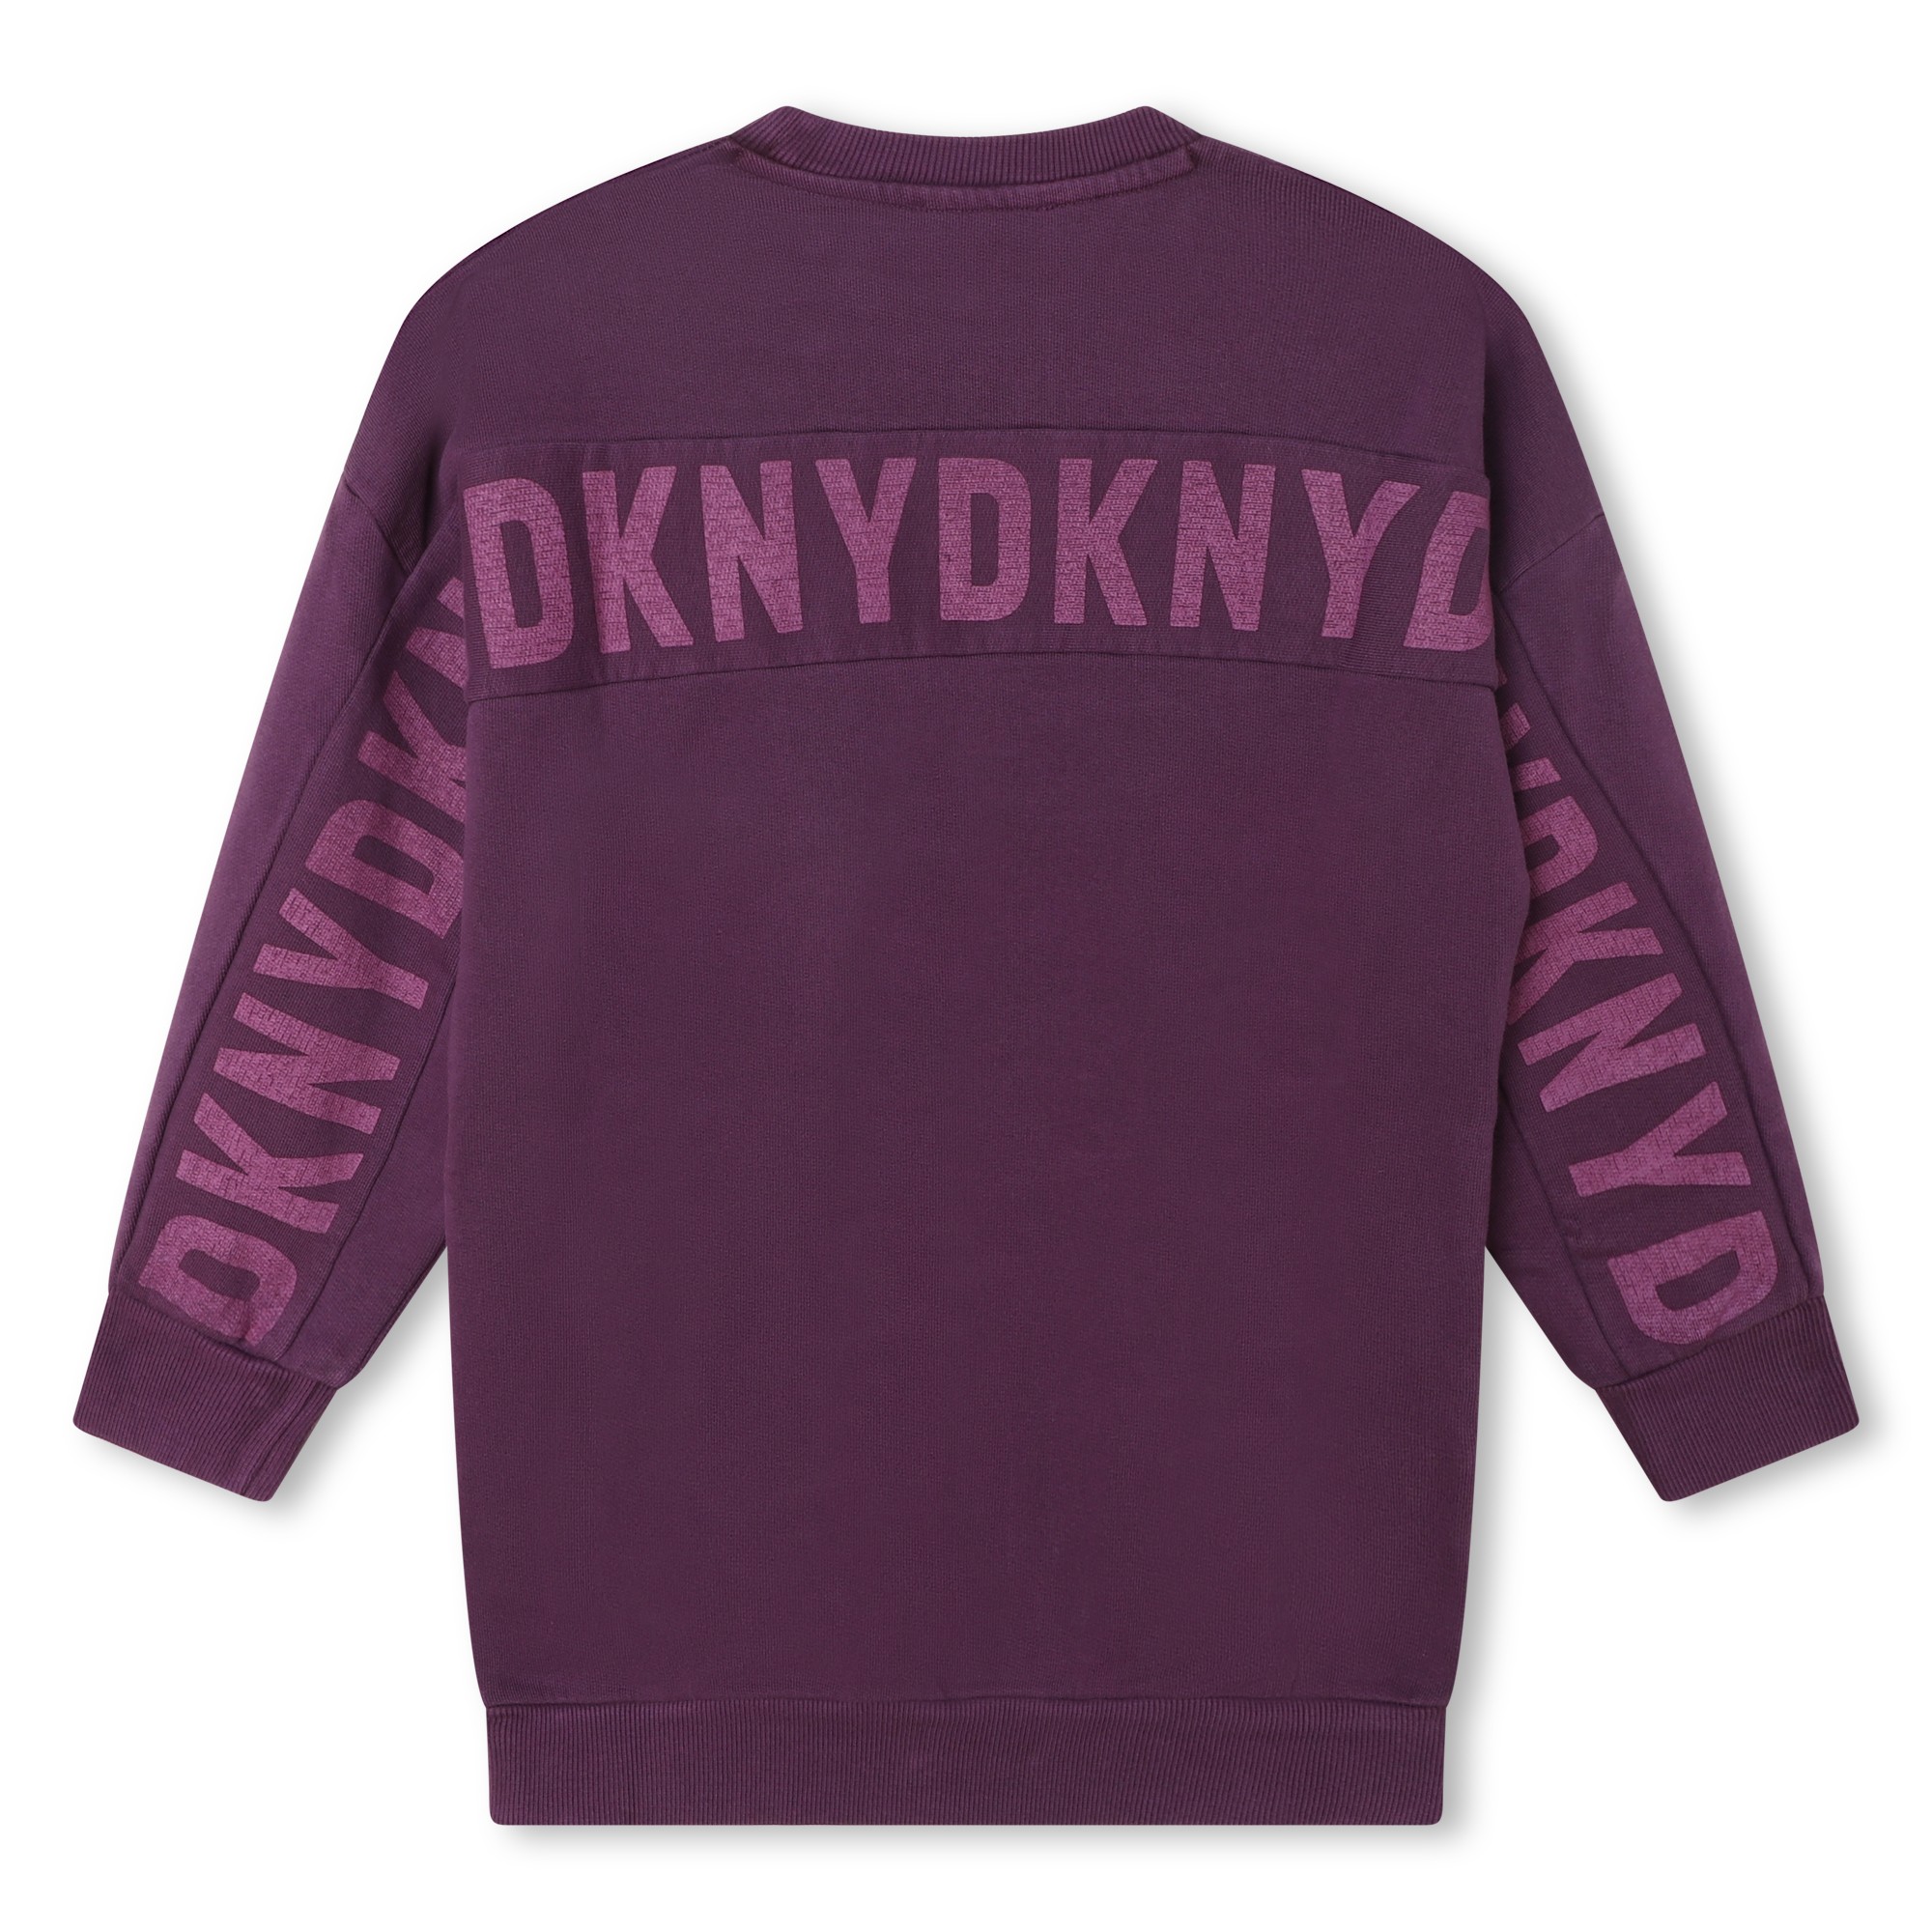 Abito dritto cotone con logo DKNY Per BAMBINA